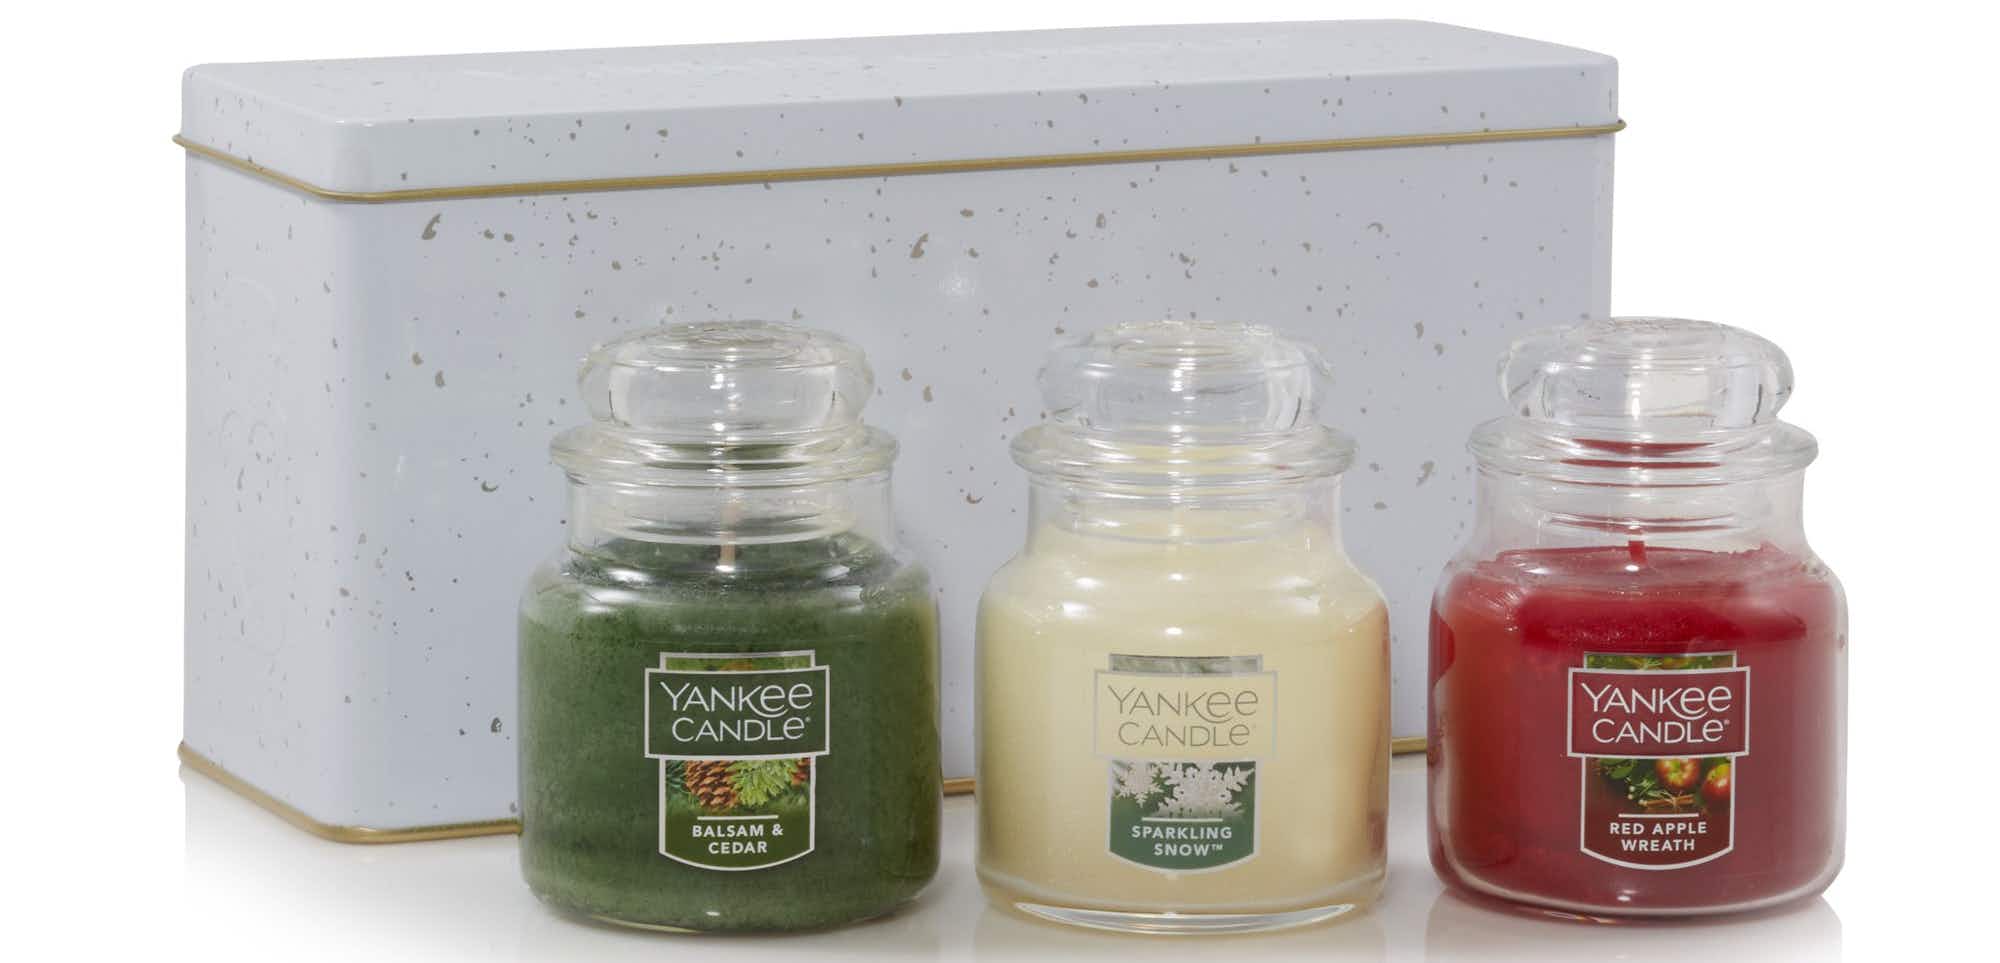 walmart-yankee-candle-small-jar-holiday-gift-set-2021